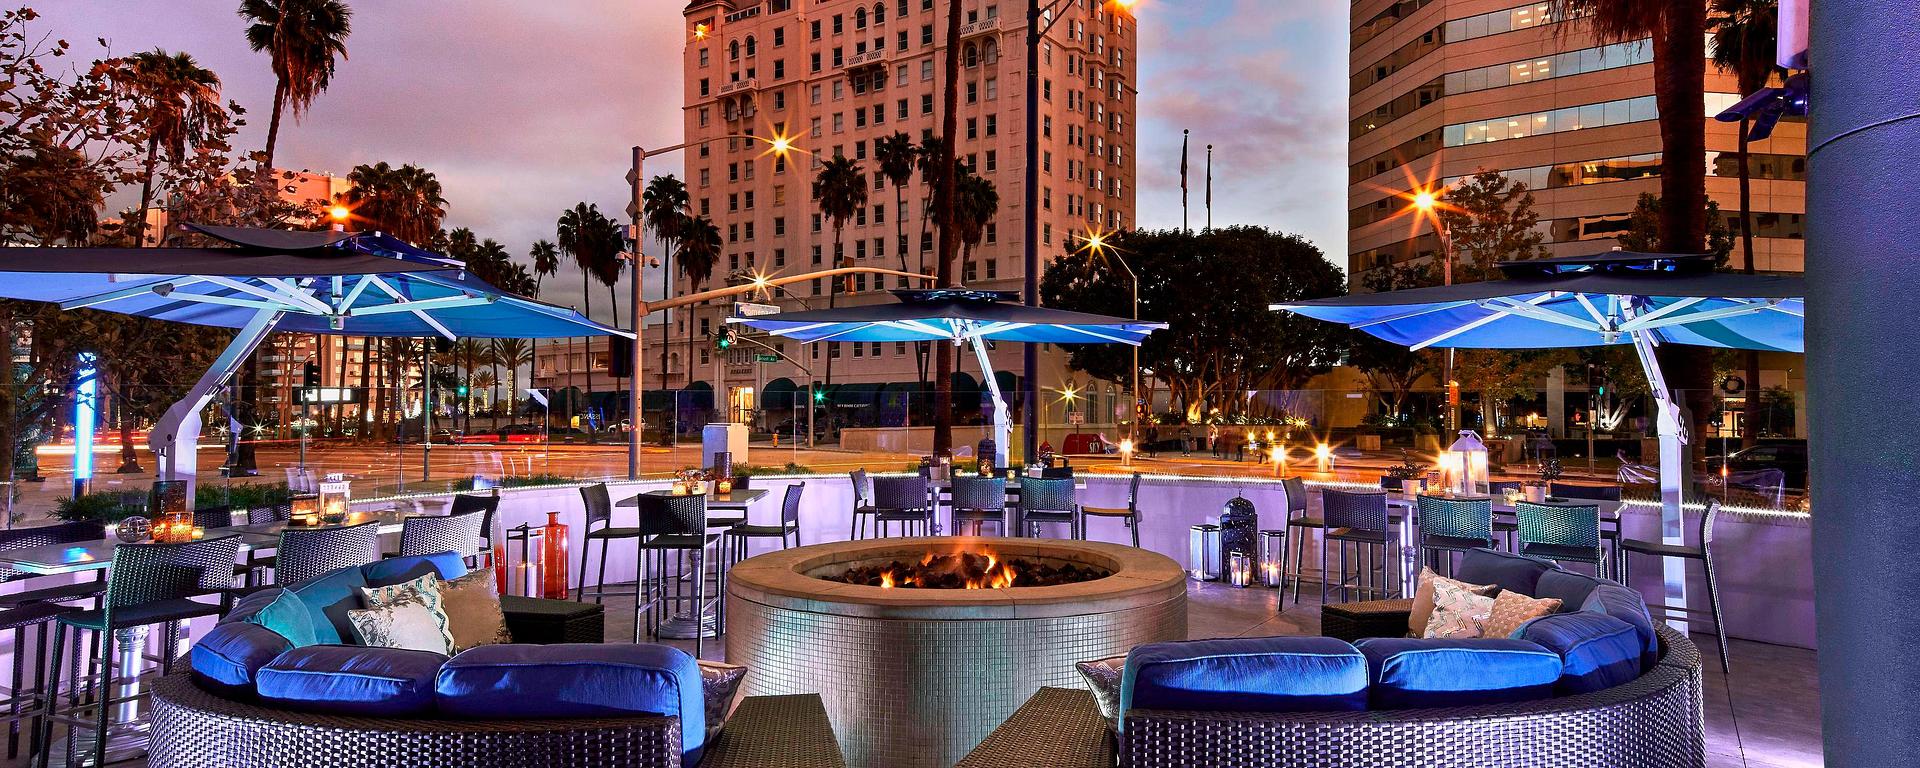 Renaissance Long Beach Hotel  111 East Ocean Boulevard  Long Beach, CA 90802